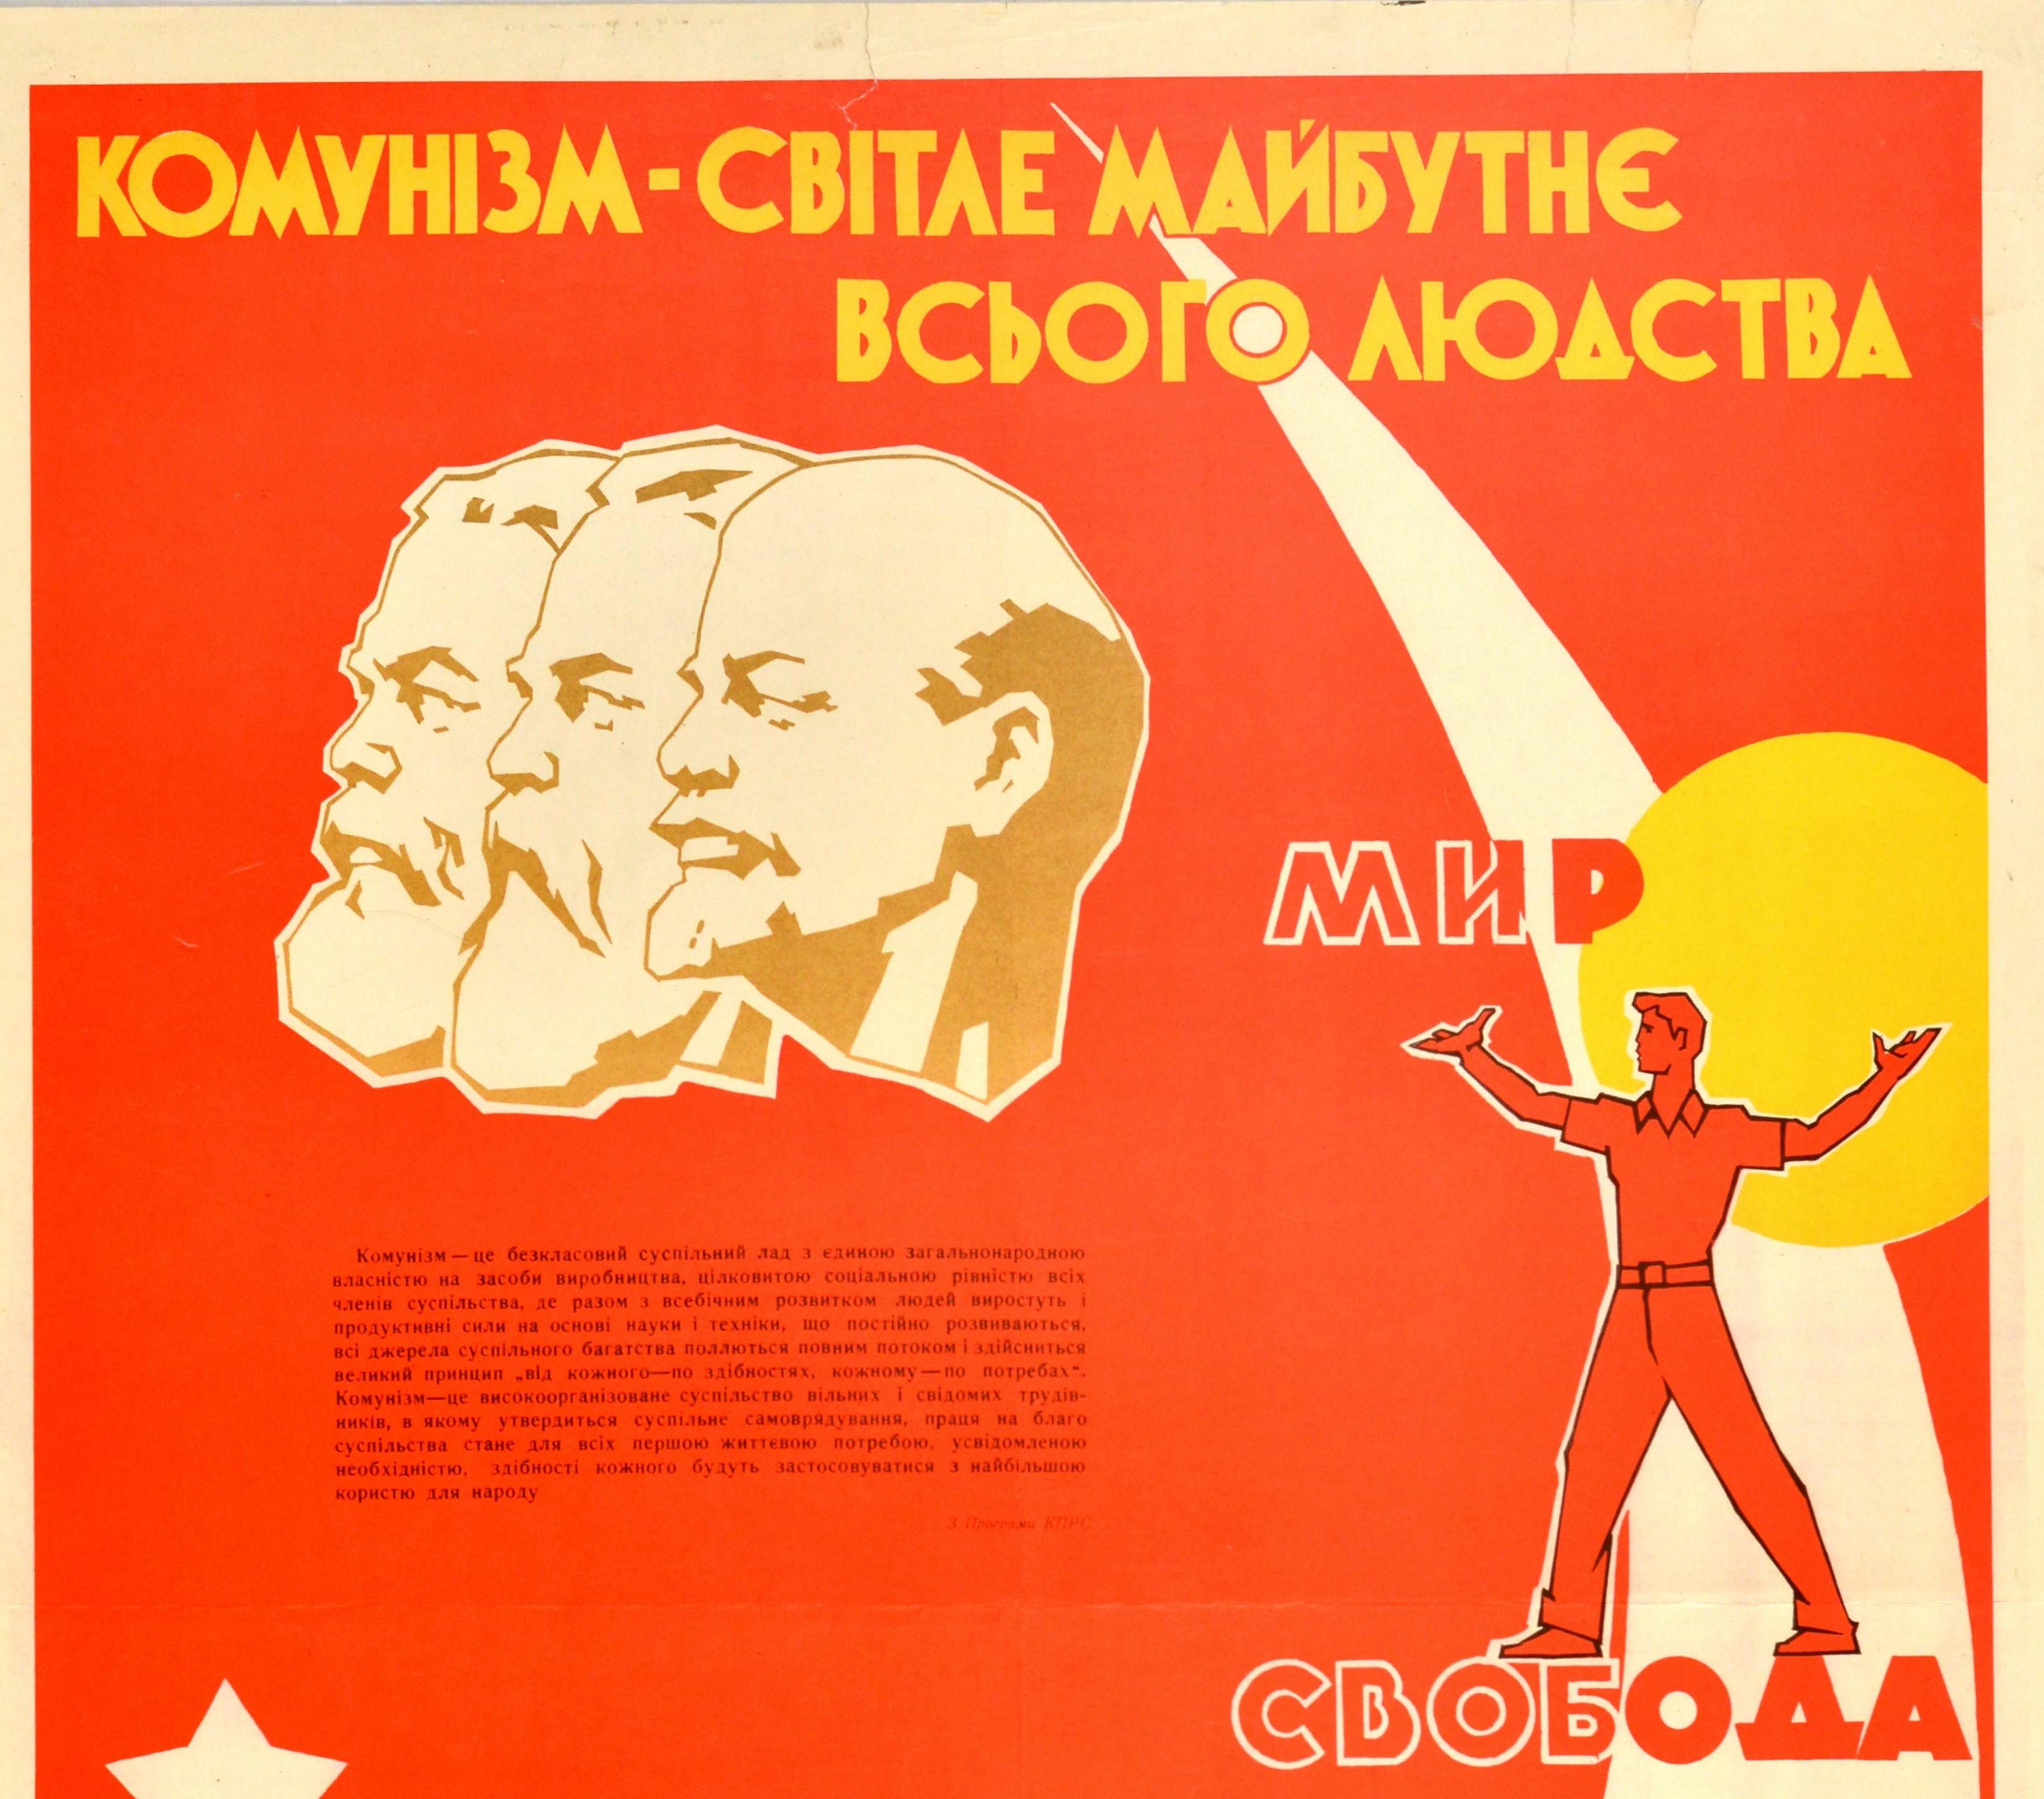 Original Vintage Poster Communism Is The Future USSR Freedom Work Equality Peace - Print by S. Davishek, Y. Zholudev, S. Filatov